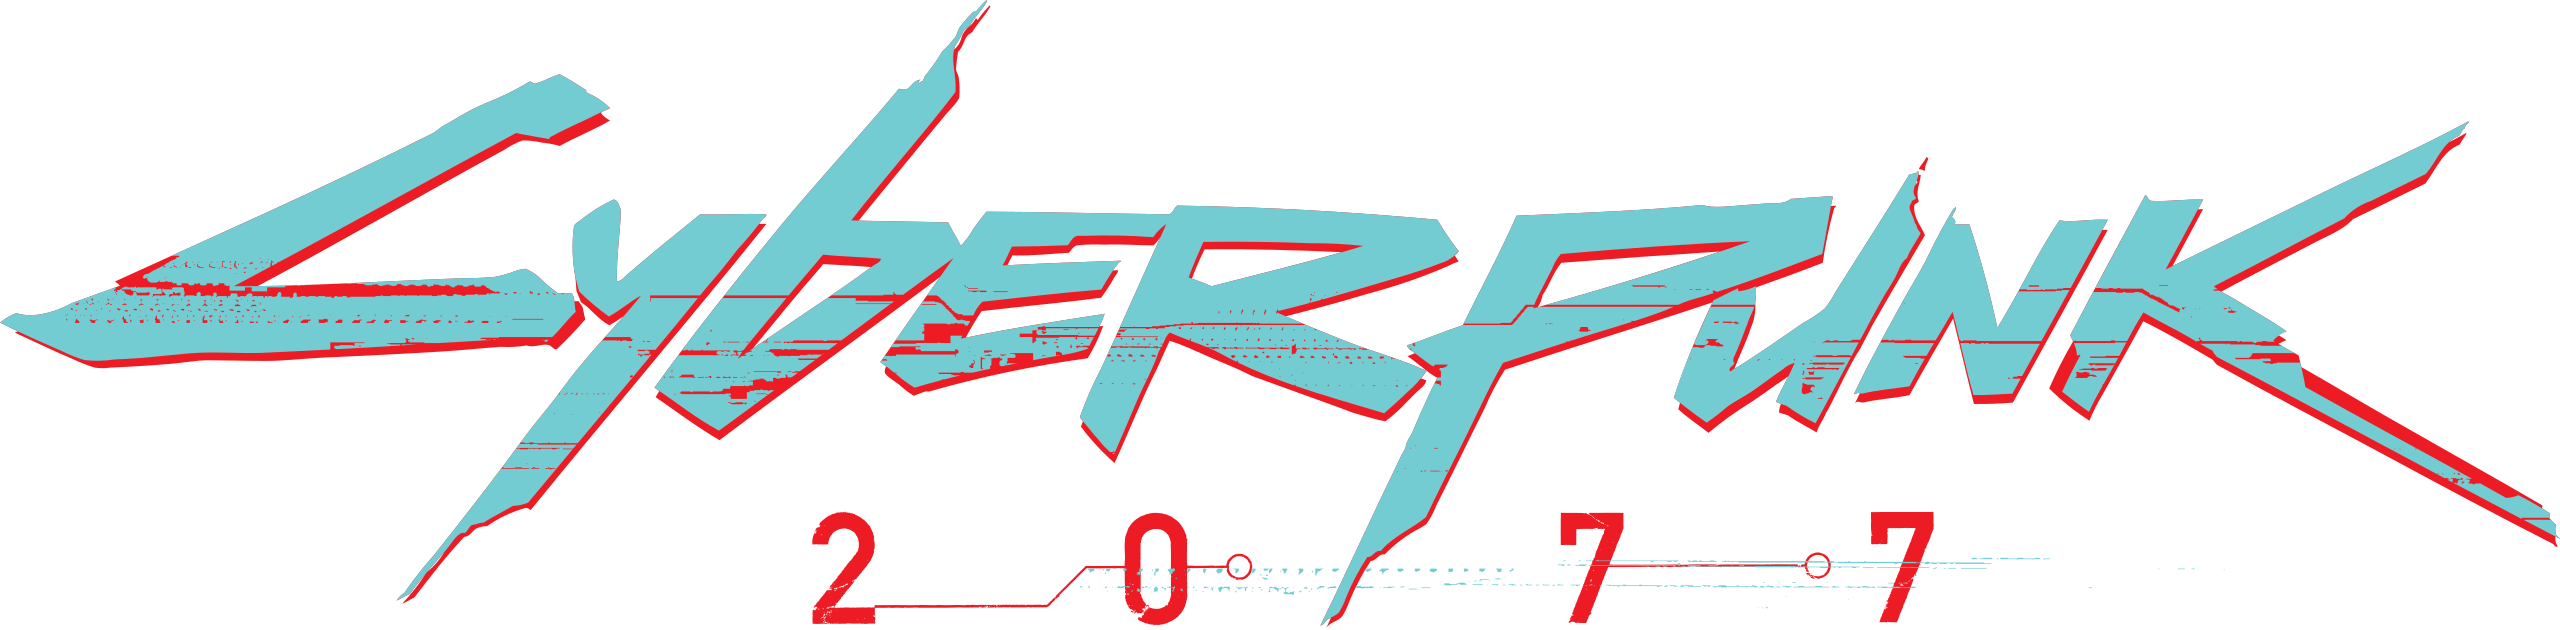 Cyberpunk logo font фото 93